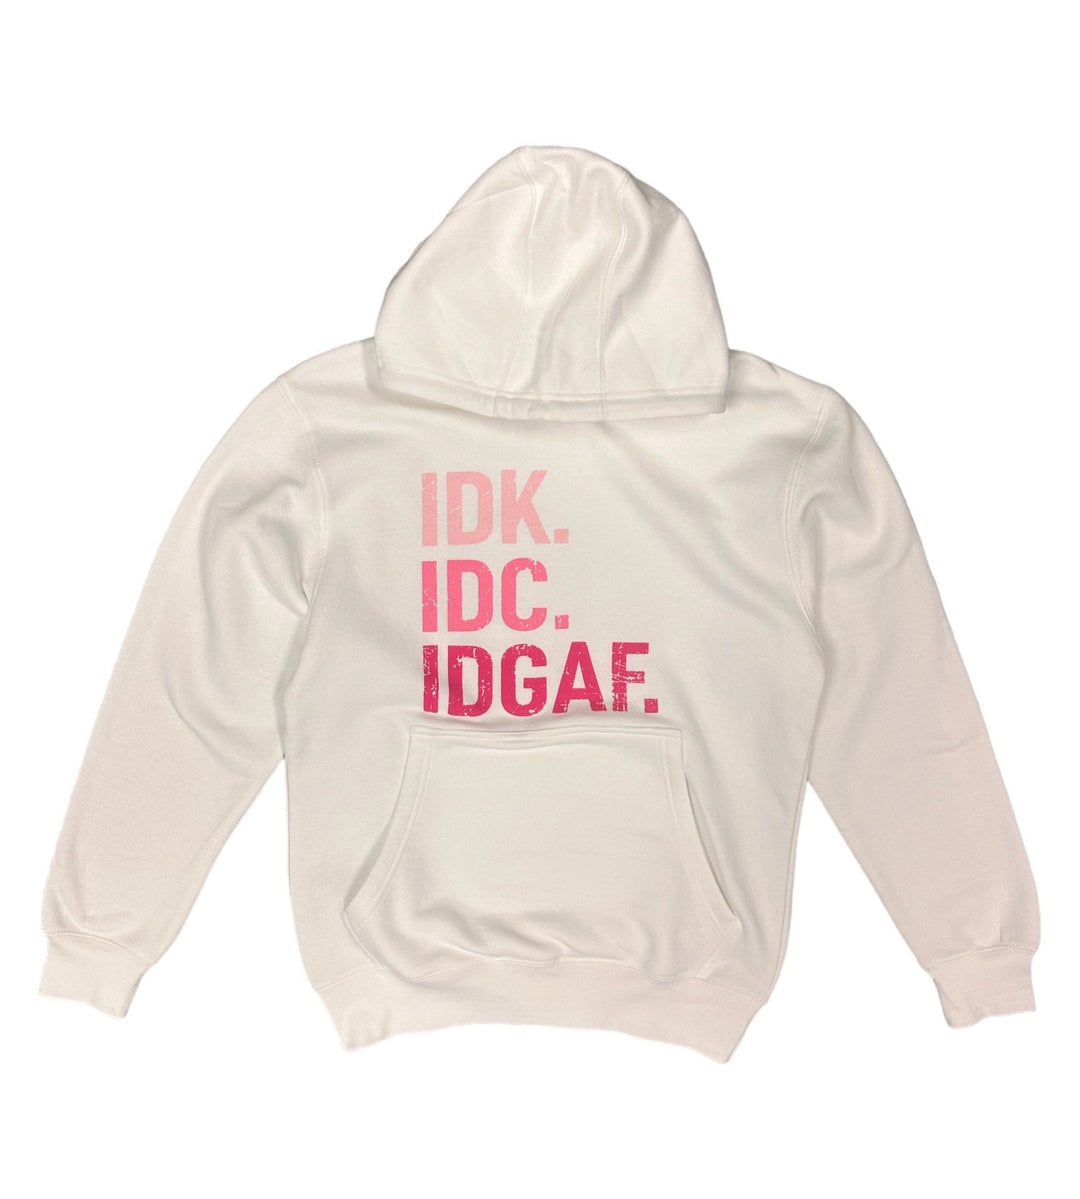 IDK. IDC. IDGAF. Hoodie